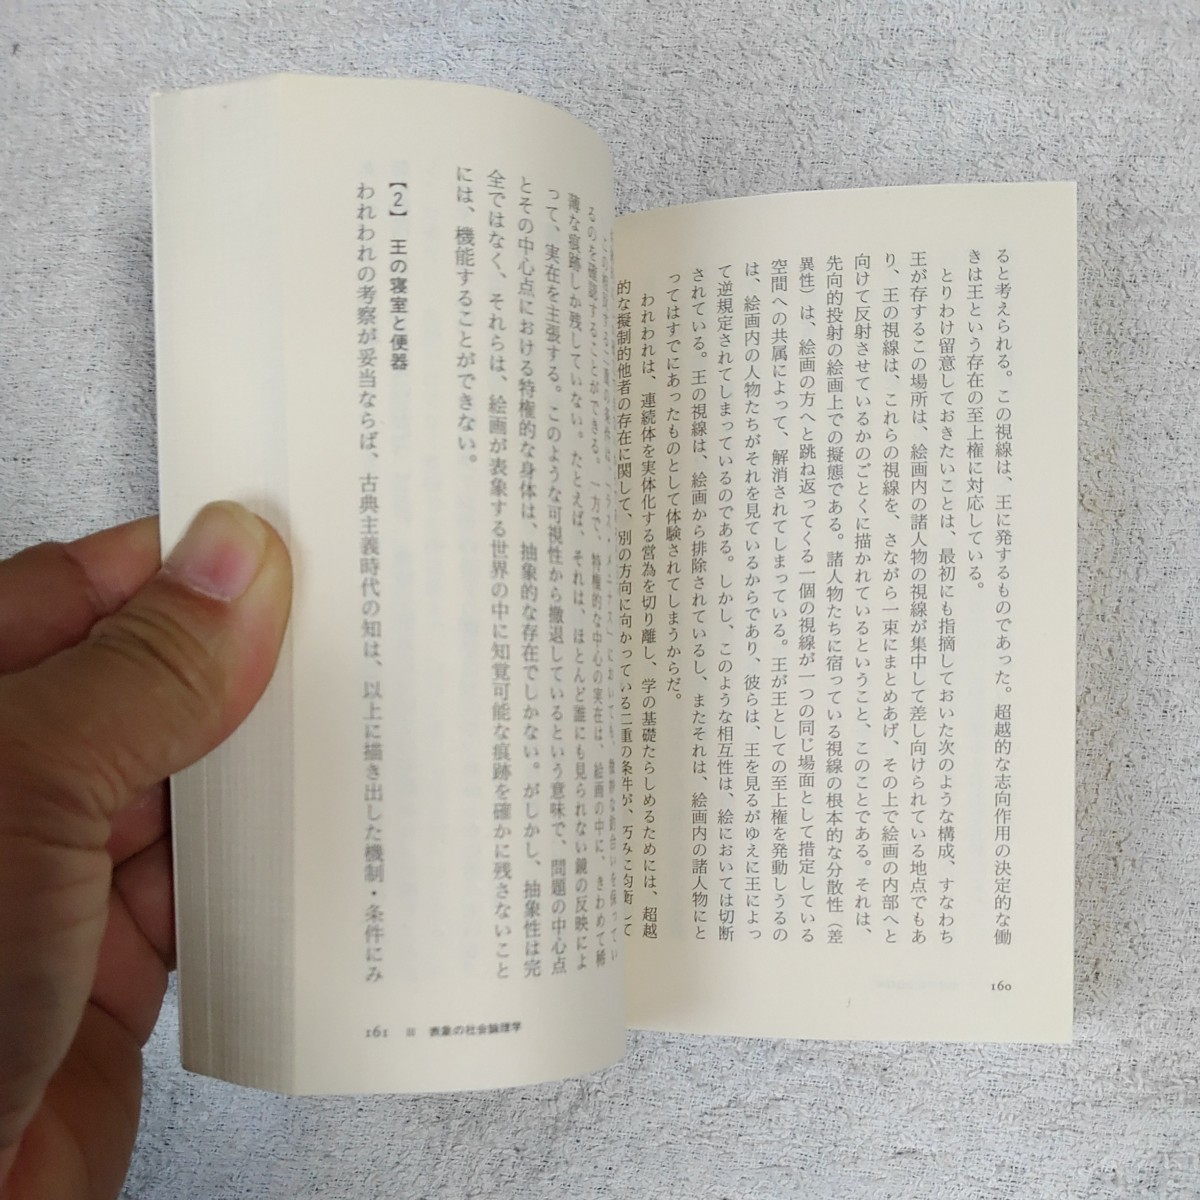 .book@ principle. paladoks ellipse illusion .( Chikuma Scholastic Collection ) large . genuine .9784480091376